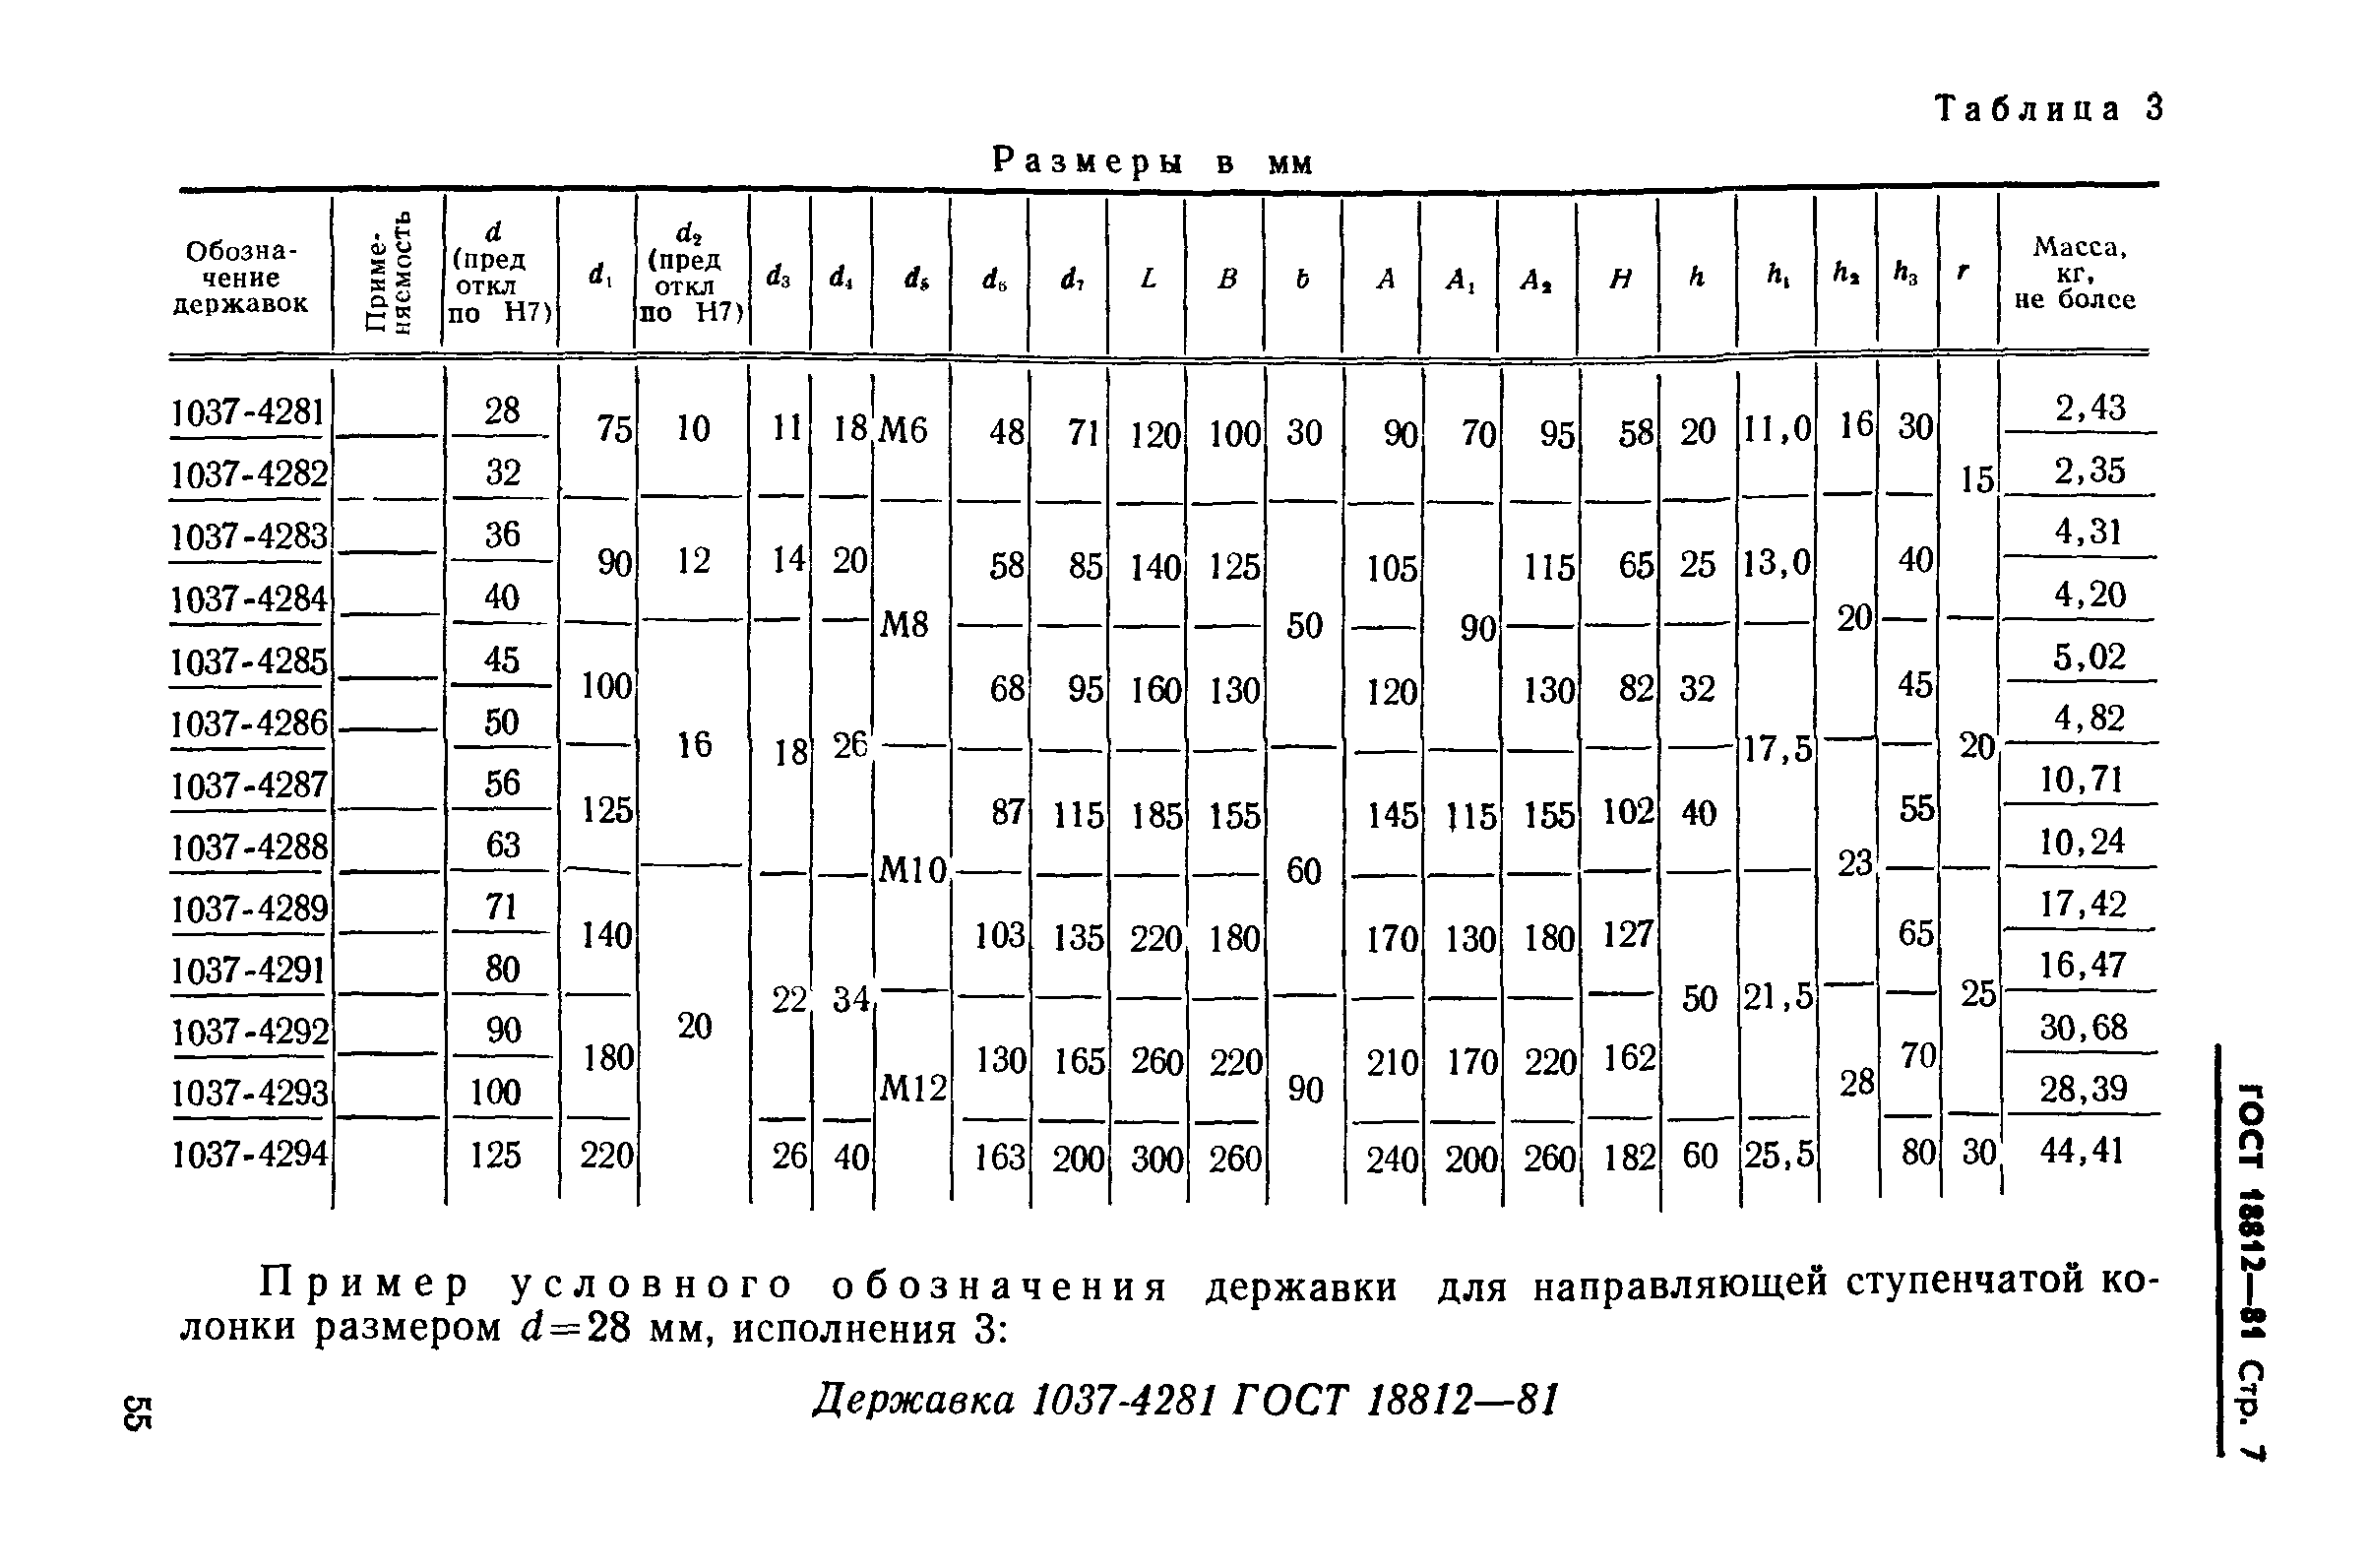 ГОСТ 18812-81